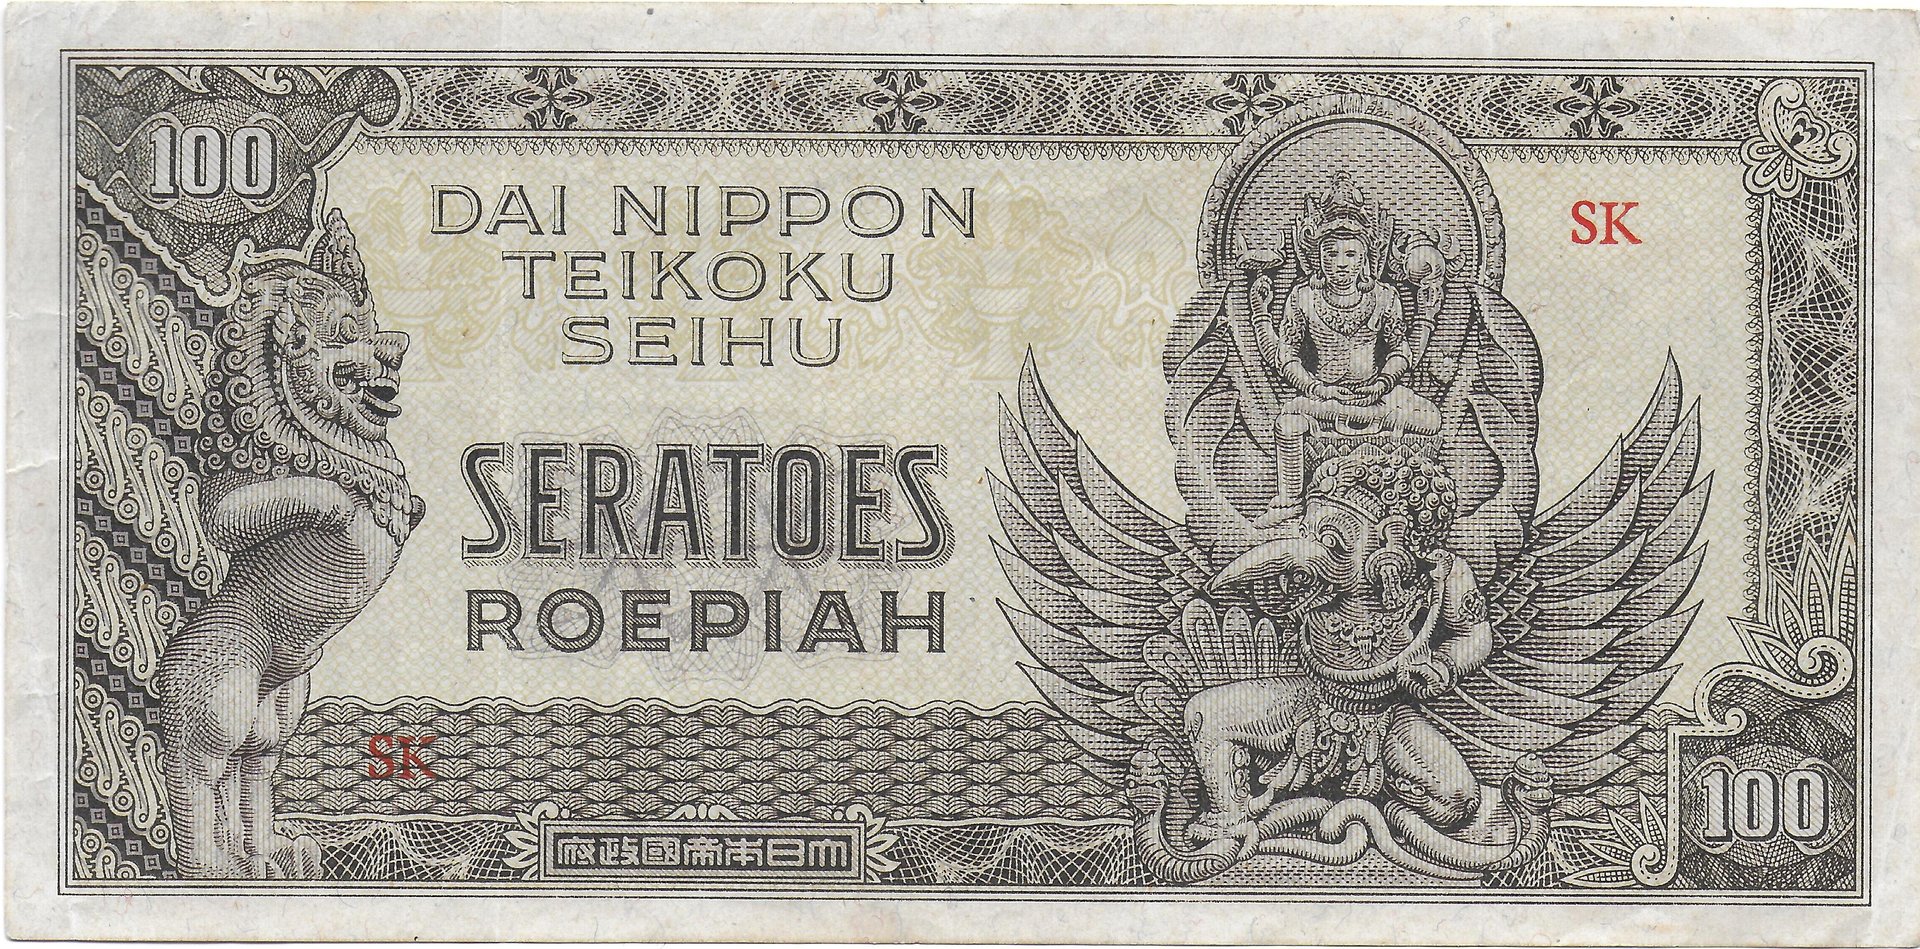 Netherlands East Indies Japan occupation 100 Rupiah face.jpg